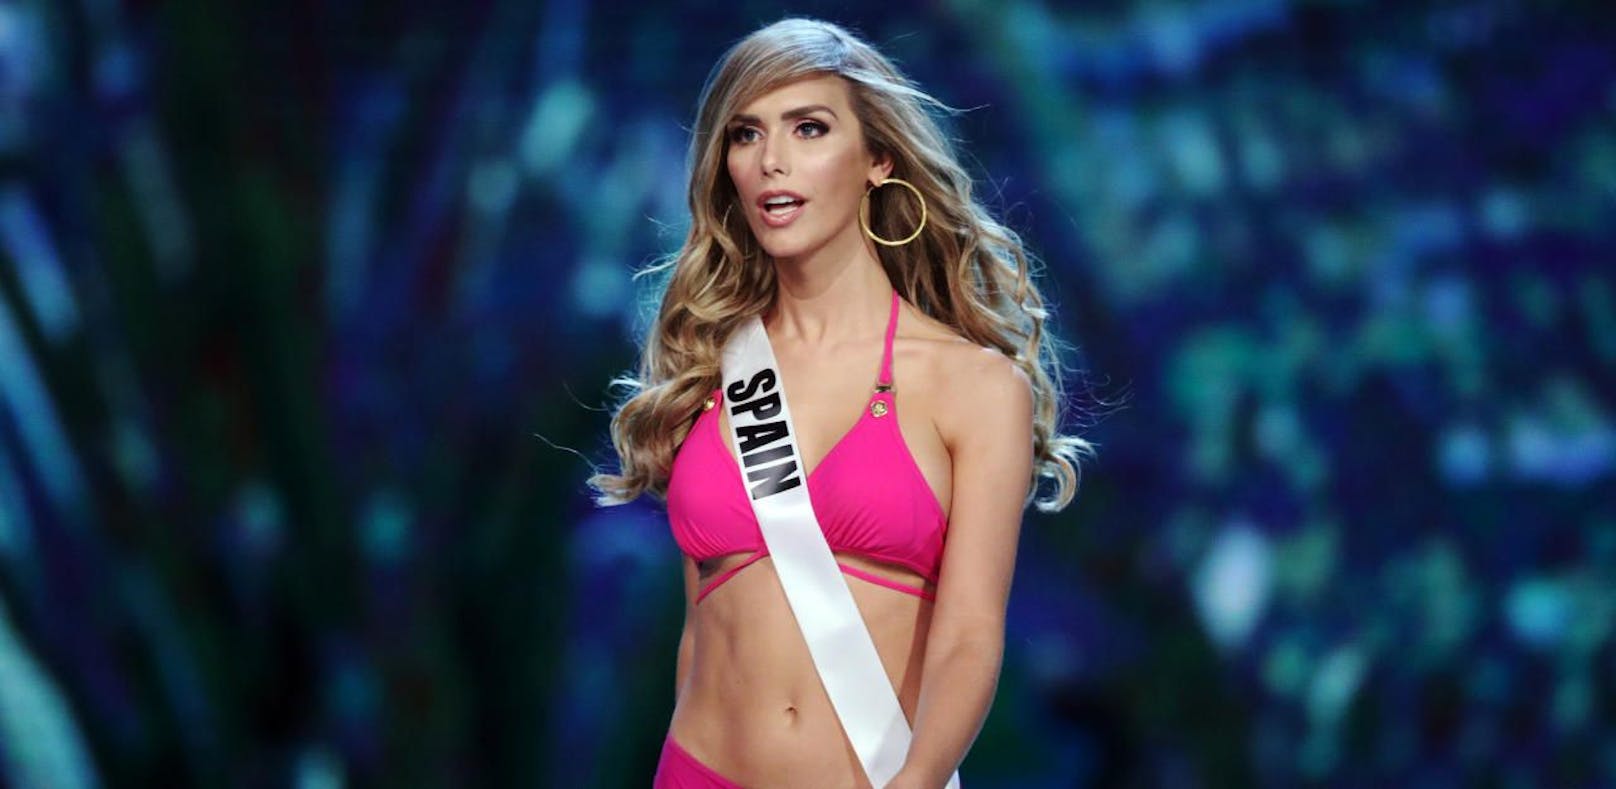 Transfrau dank Trump bei Miss Universe